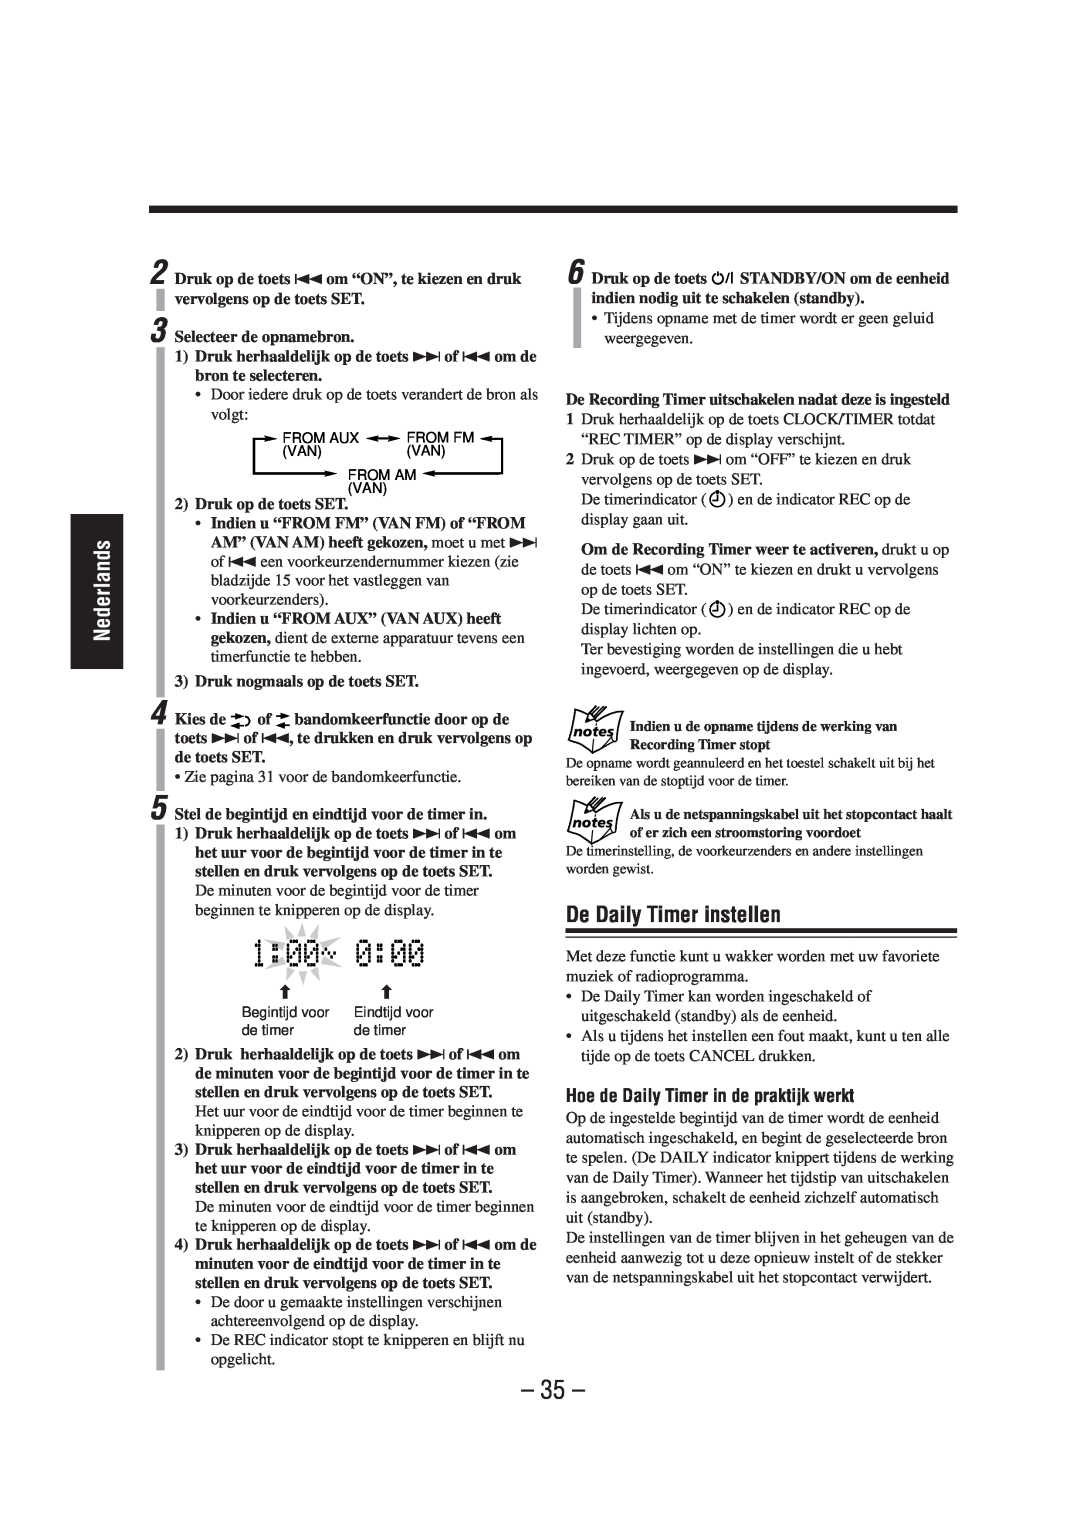 JVC UX-A52R manual De Daily Timer instellen, Hoe de Daily Timer in de praktijk werkt, Nederlands 